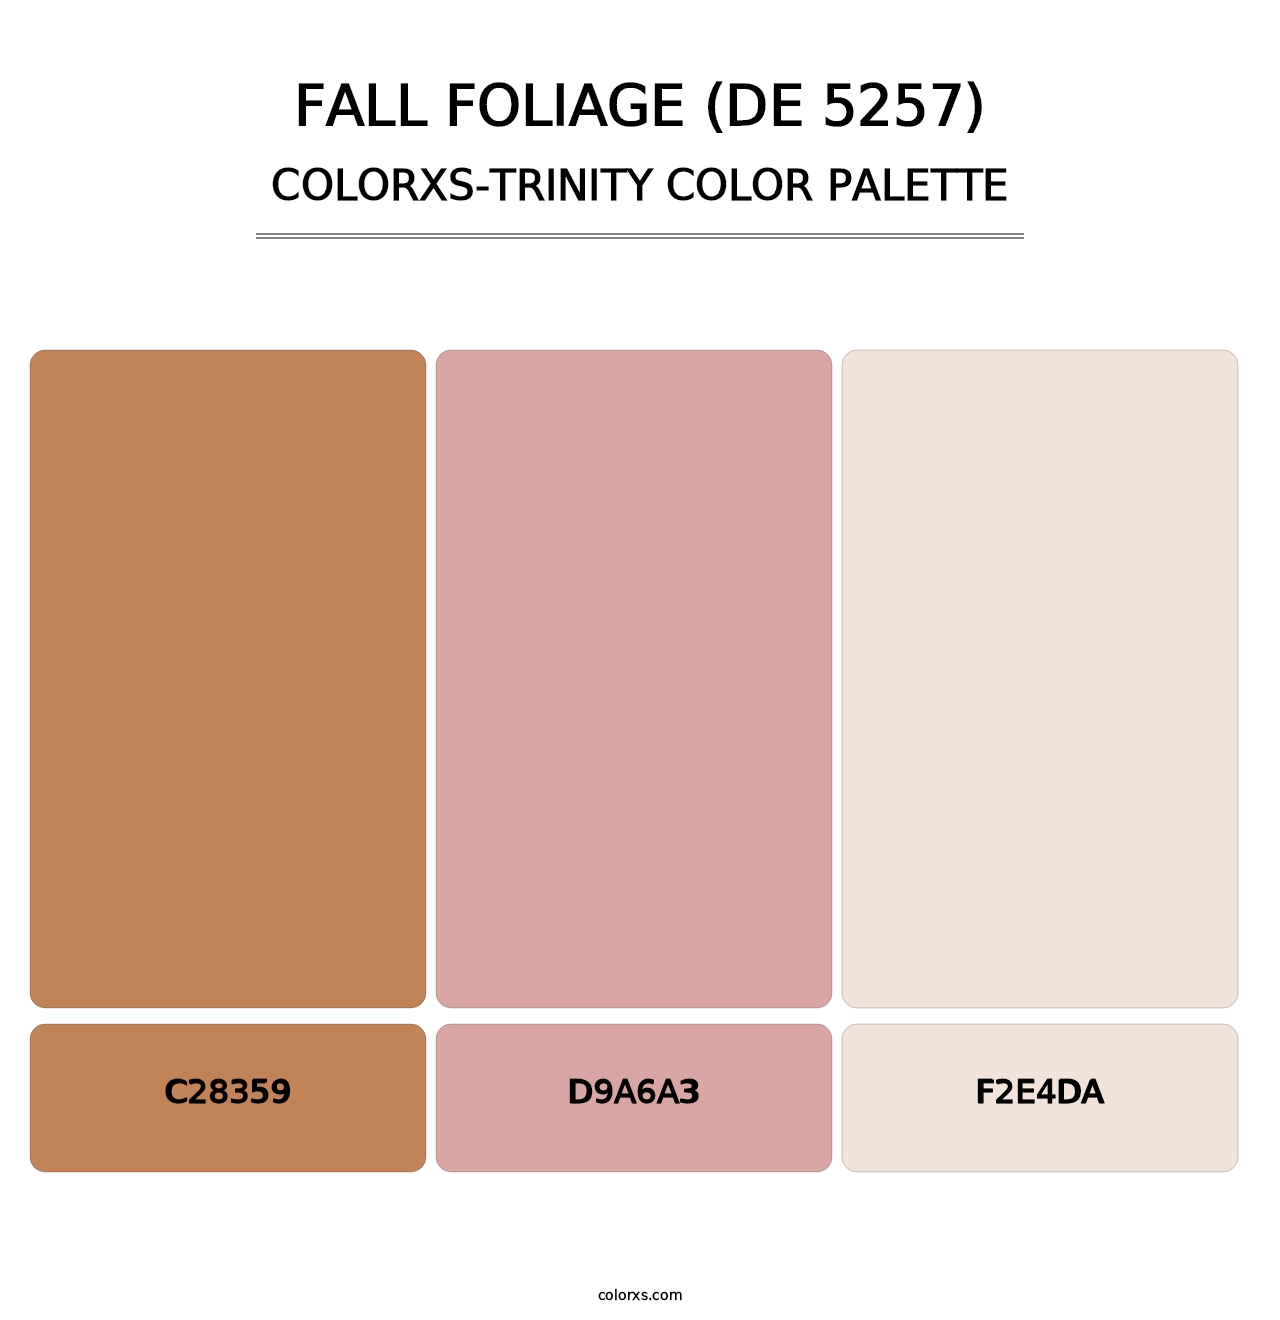 Fall Foliage (DE 5257) - Colorxs Trinity Palette